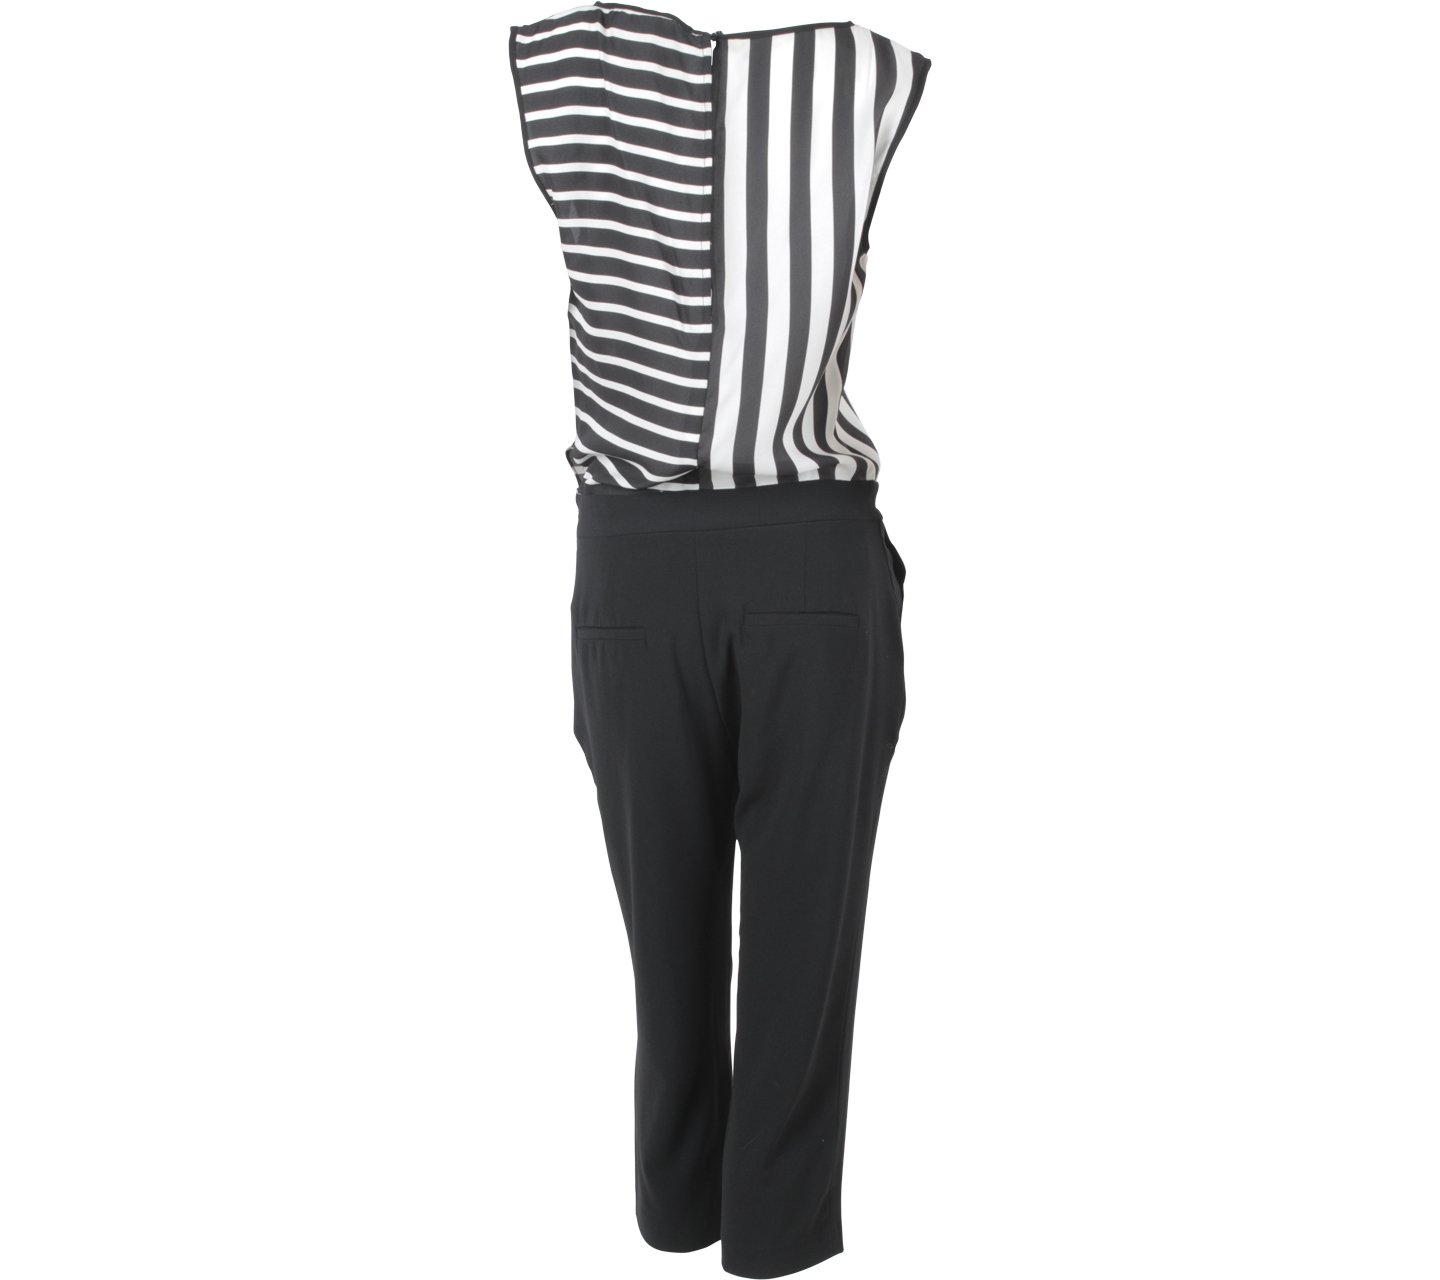 Zara Black And White Striped Jumpsuit